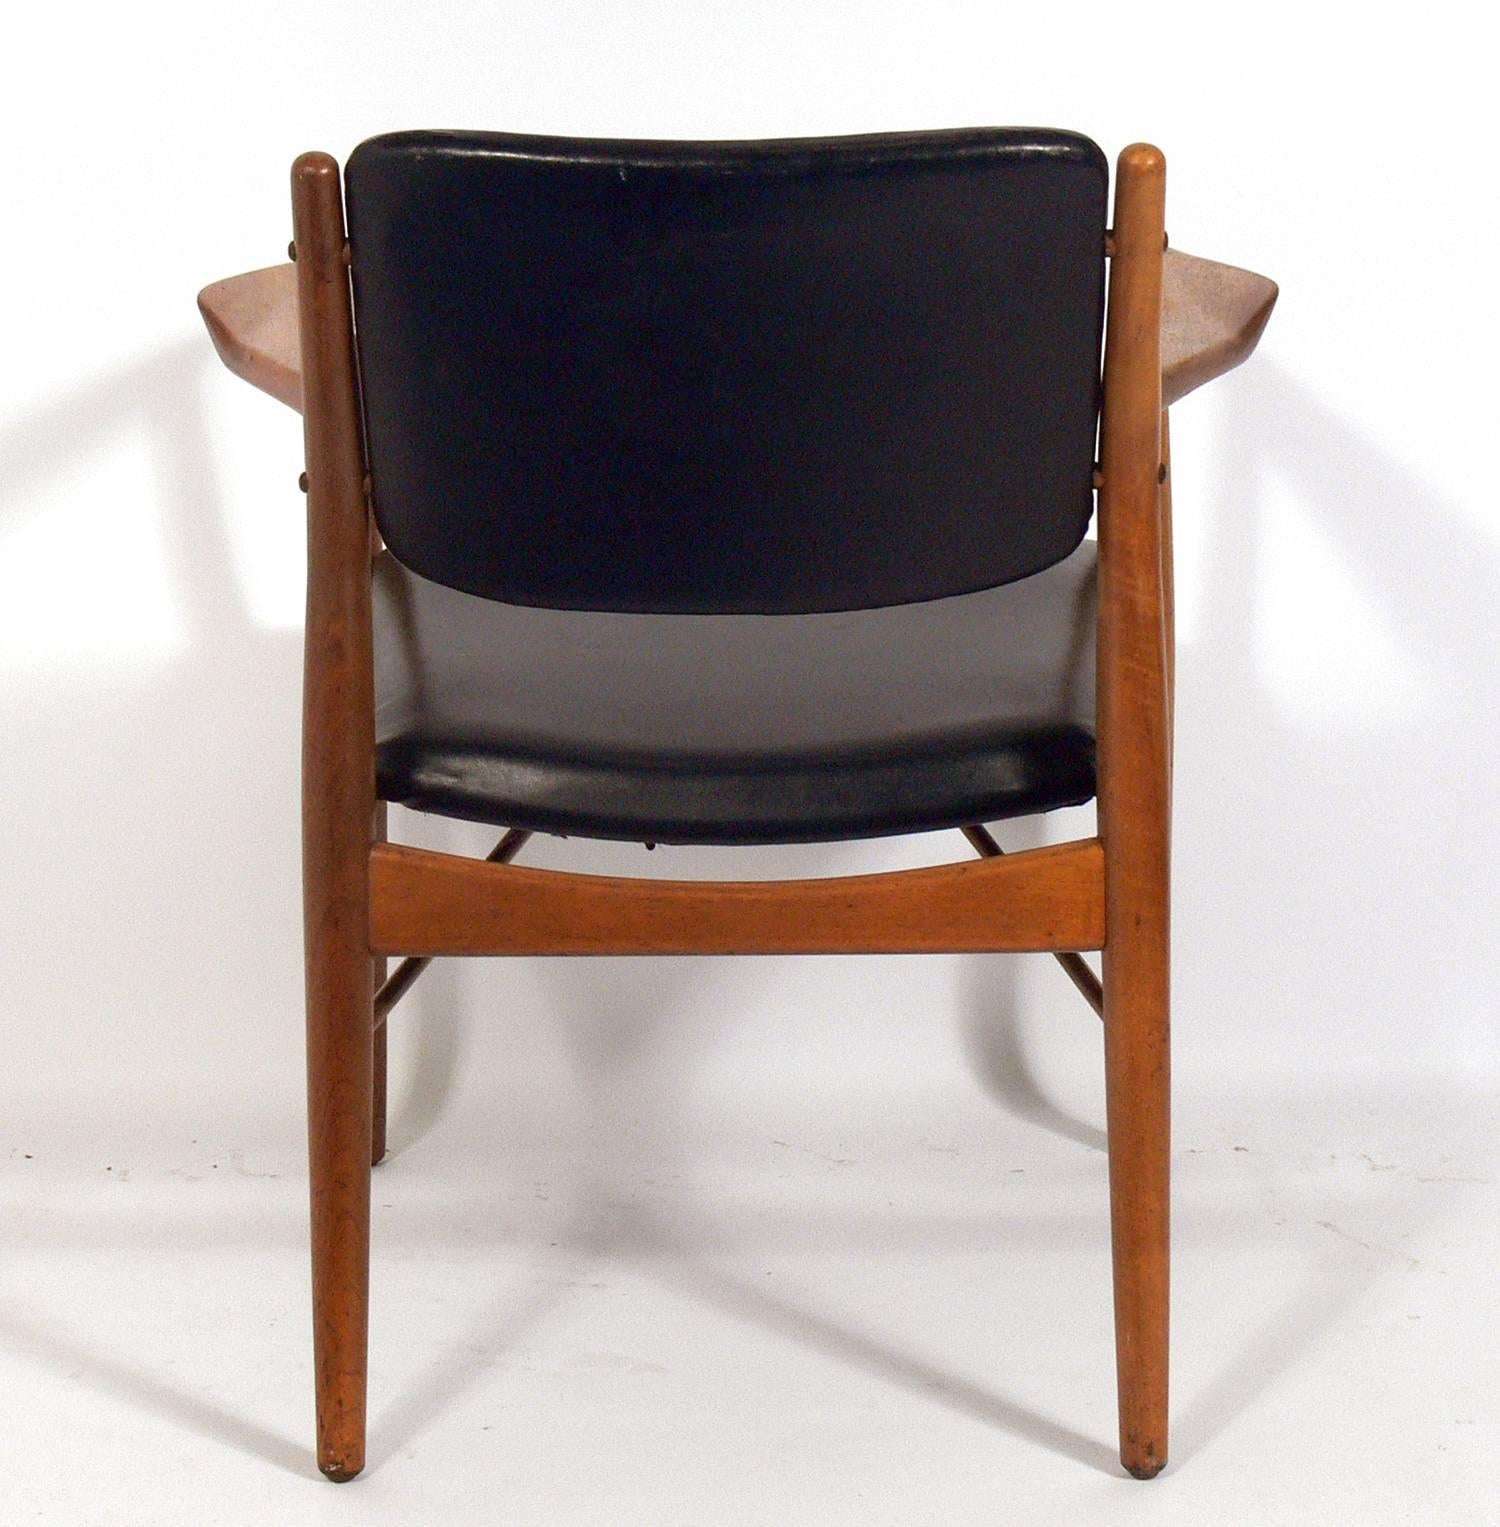 American Sculptural Danish Modern Lounge Chair by Arne Vodder